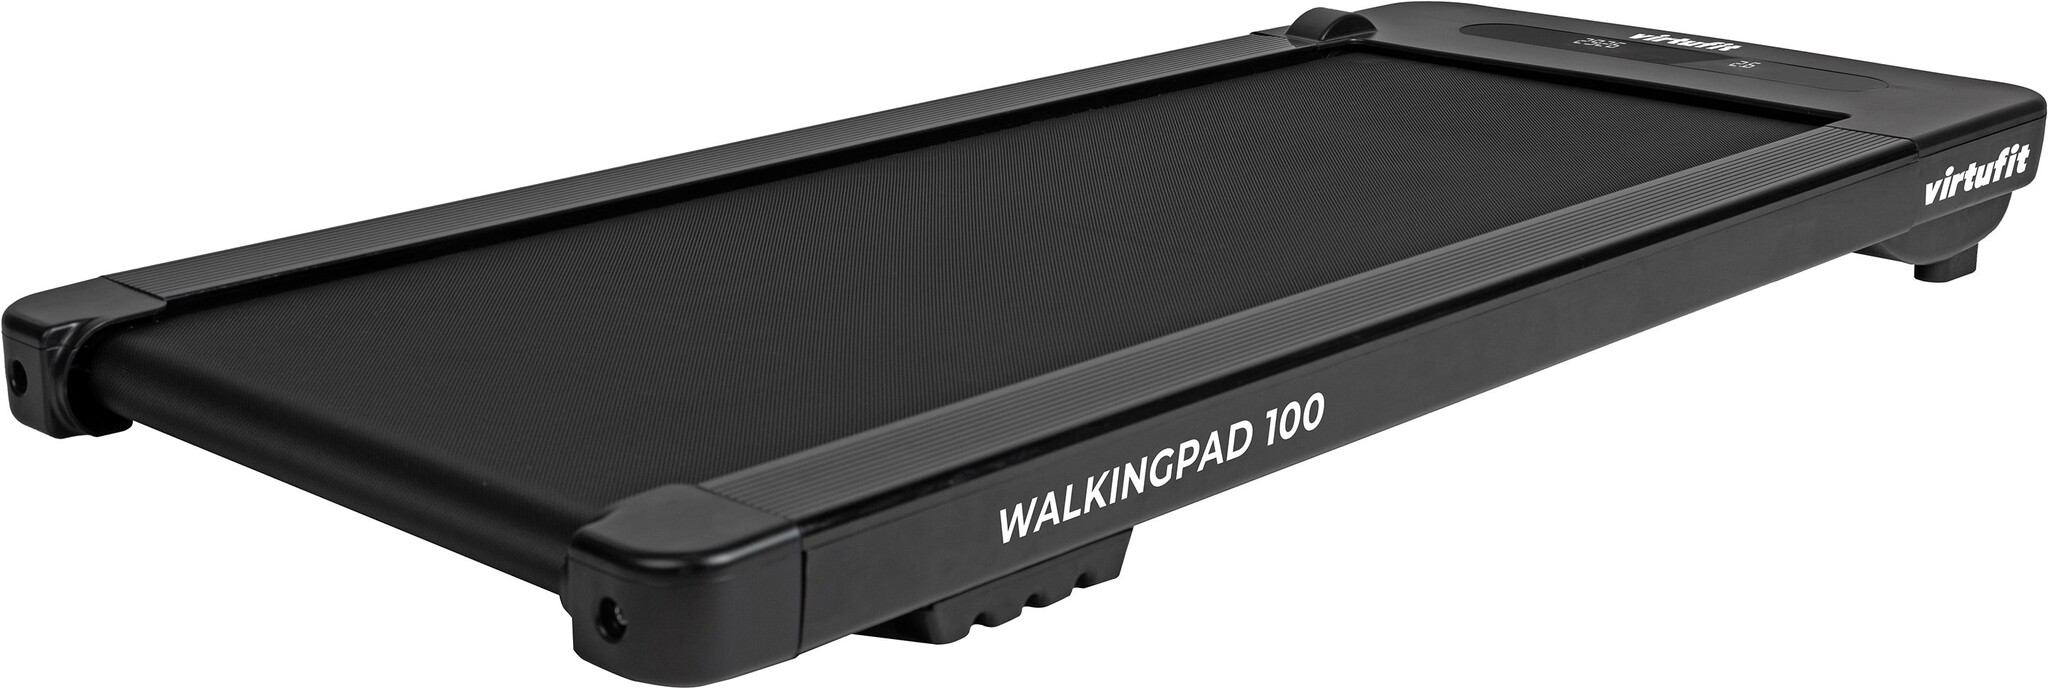 Virtufit - Walkingpad 100 - Hardloopband - Loopband - 12 programma's